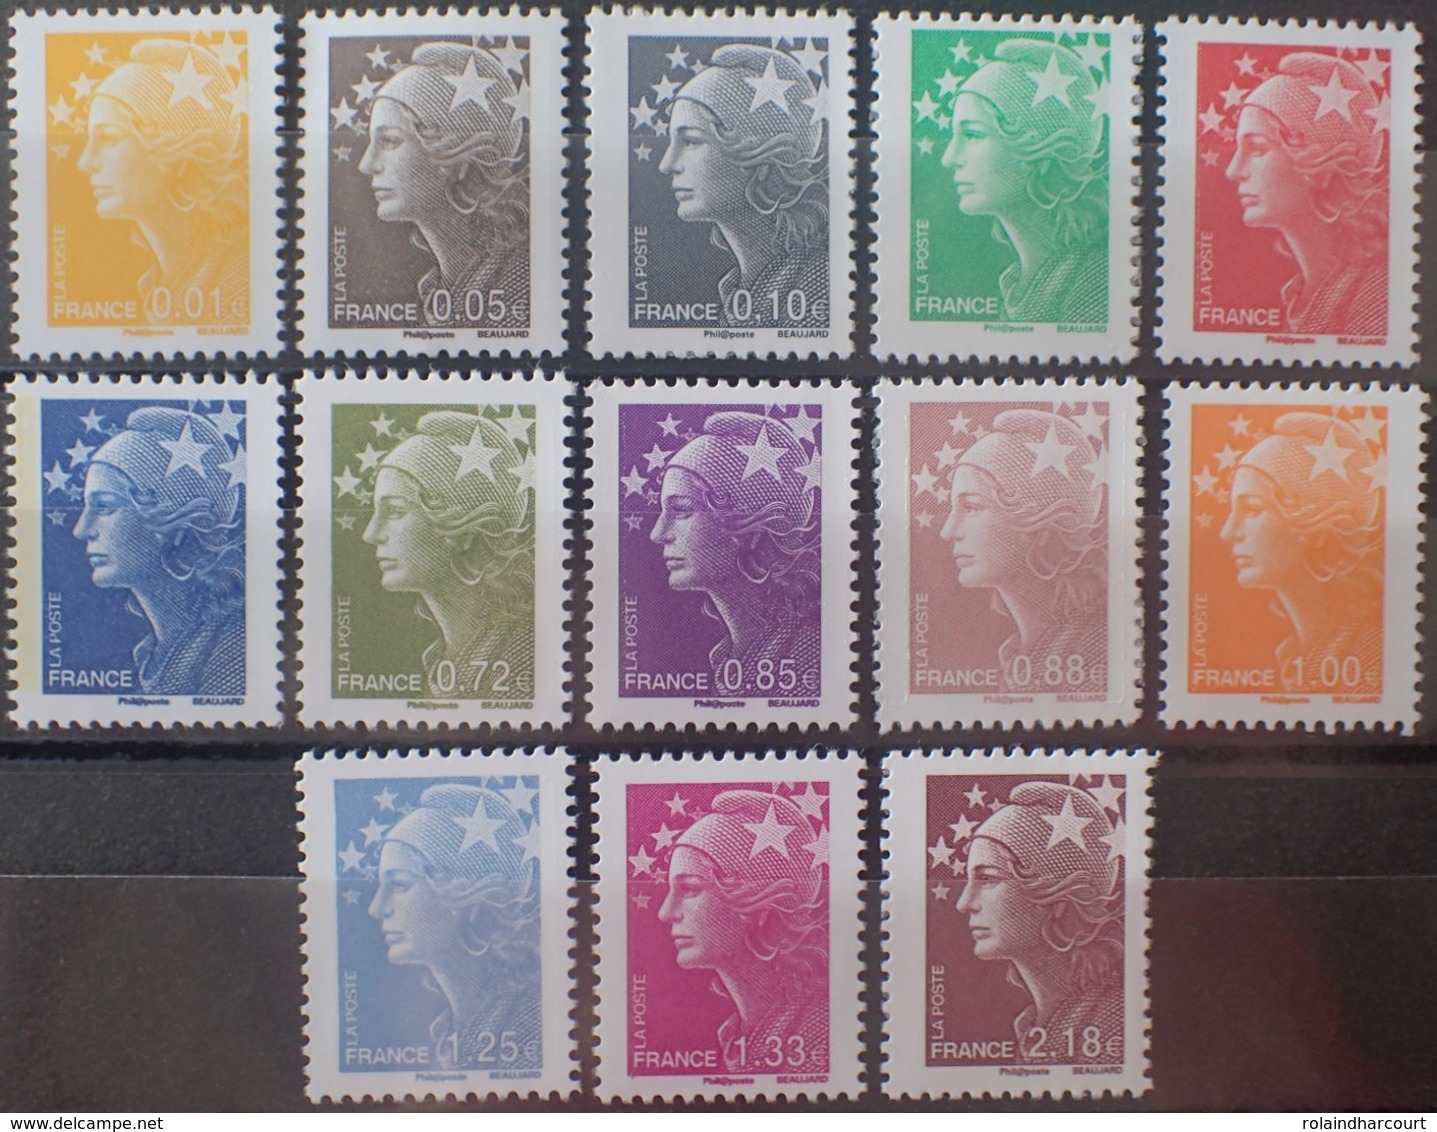 DF40266/1559 - 2008 - FRANCE - TYPE MARIANNE DE BEAUJARD - SERIE COMPLETE - N°4226 à 4238 NEUFS** - Unused Stamps